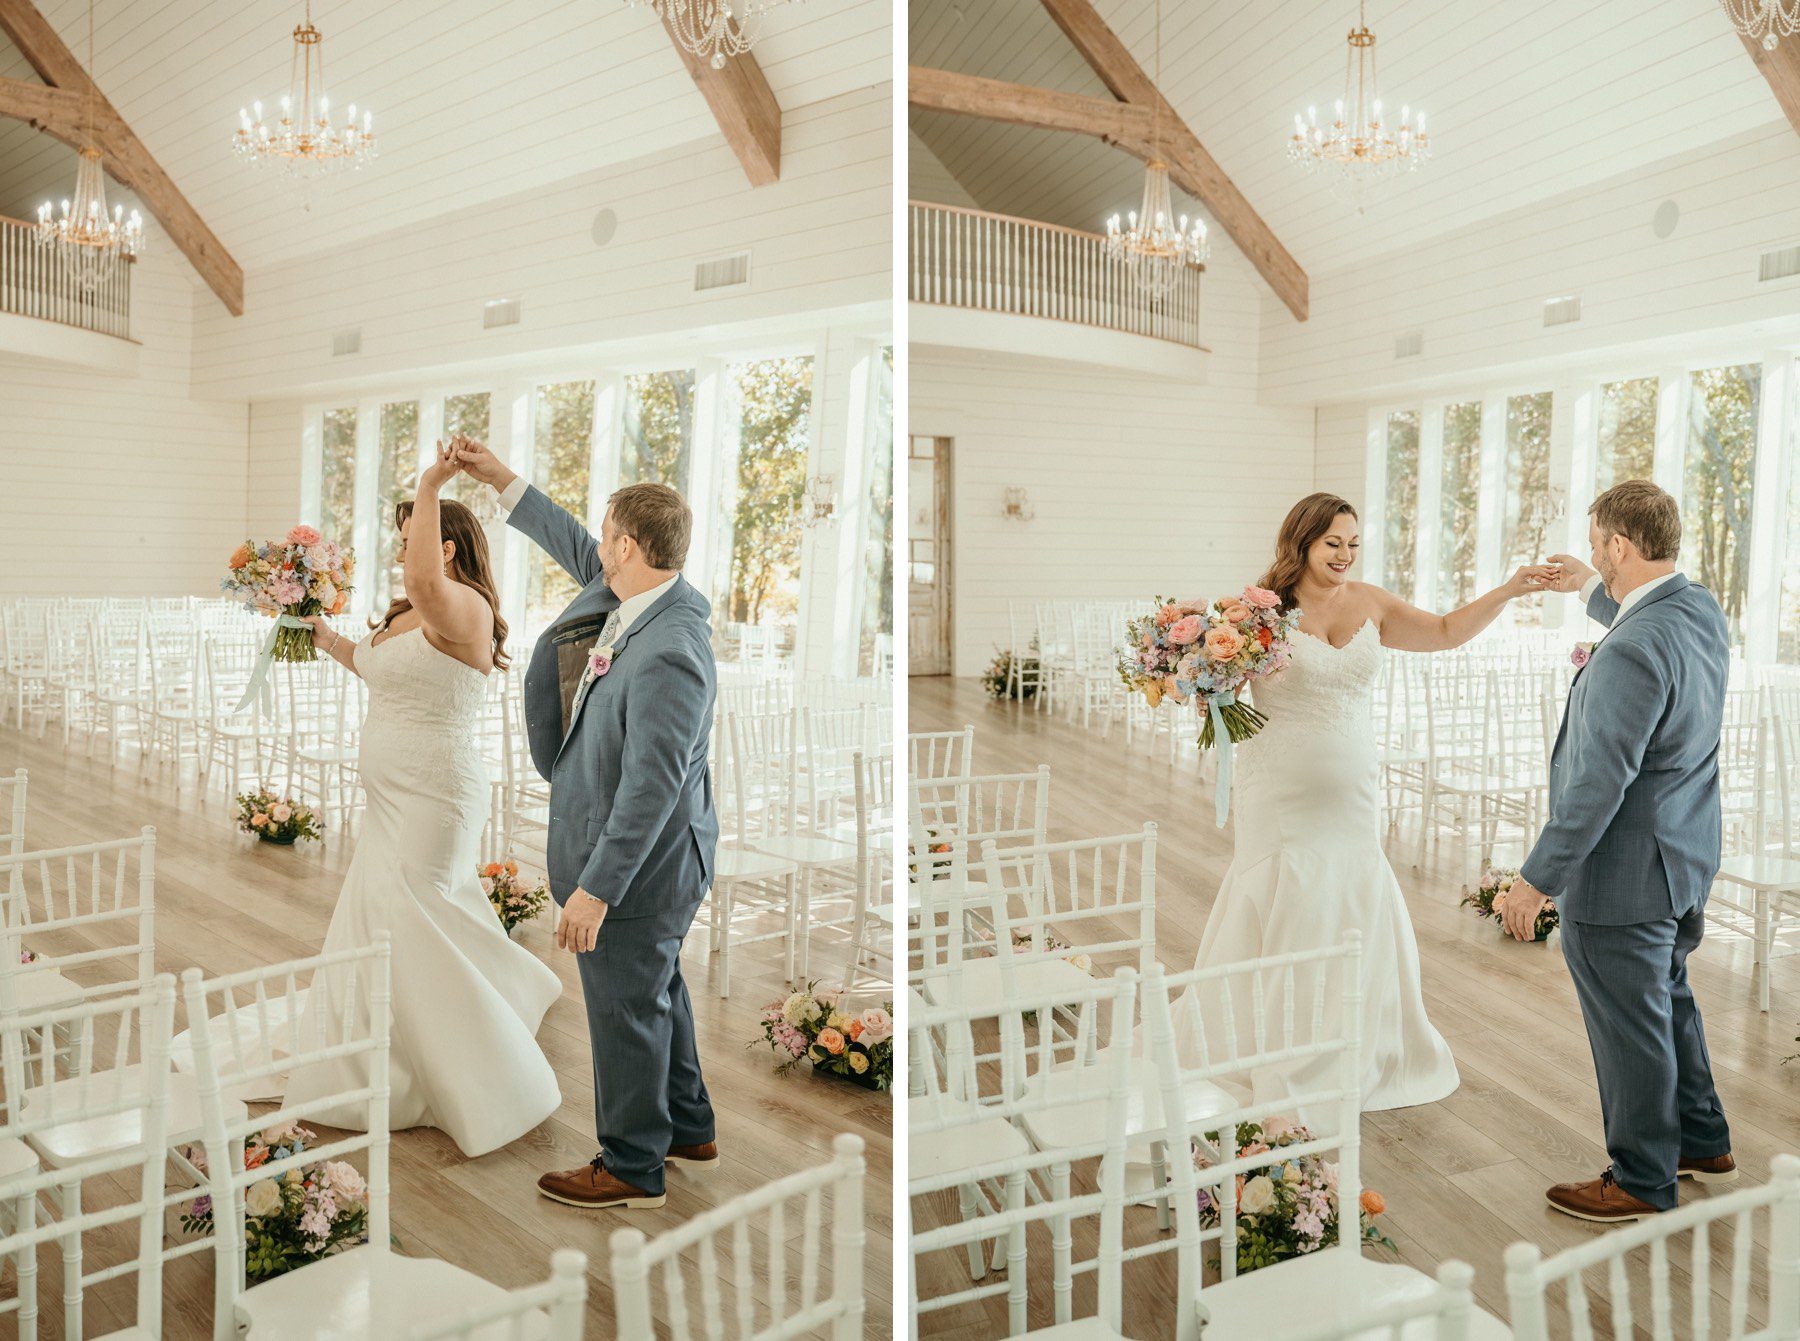 Groom twirling bride during first look